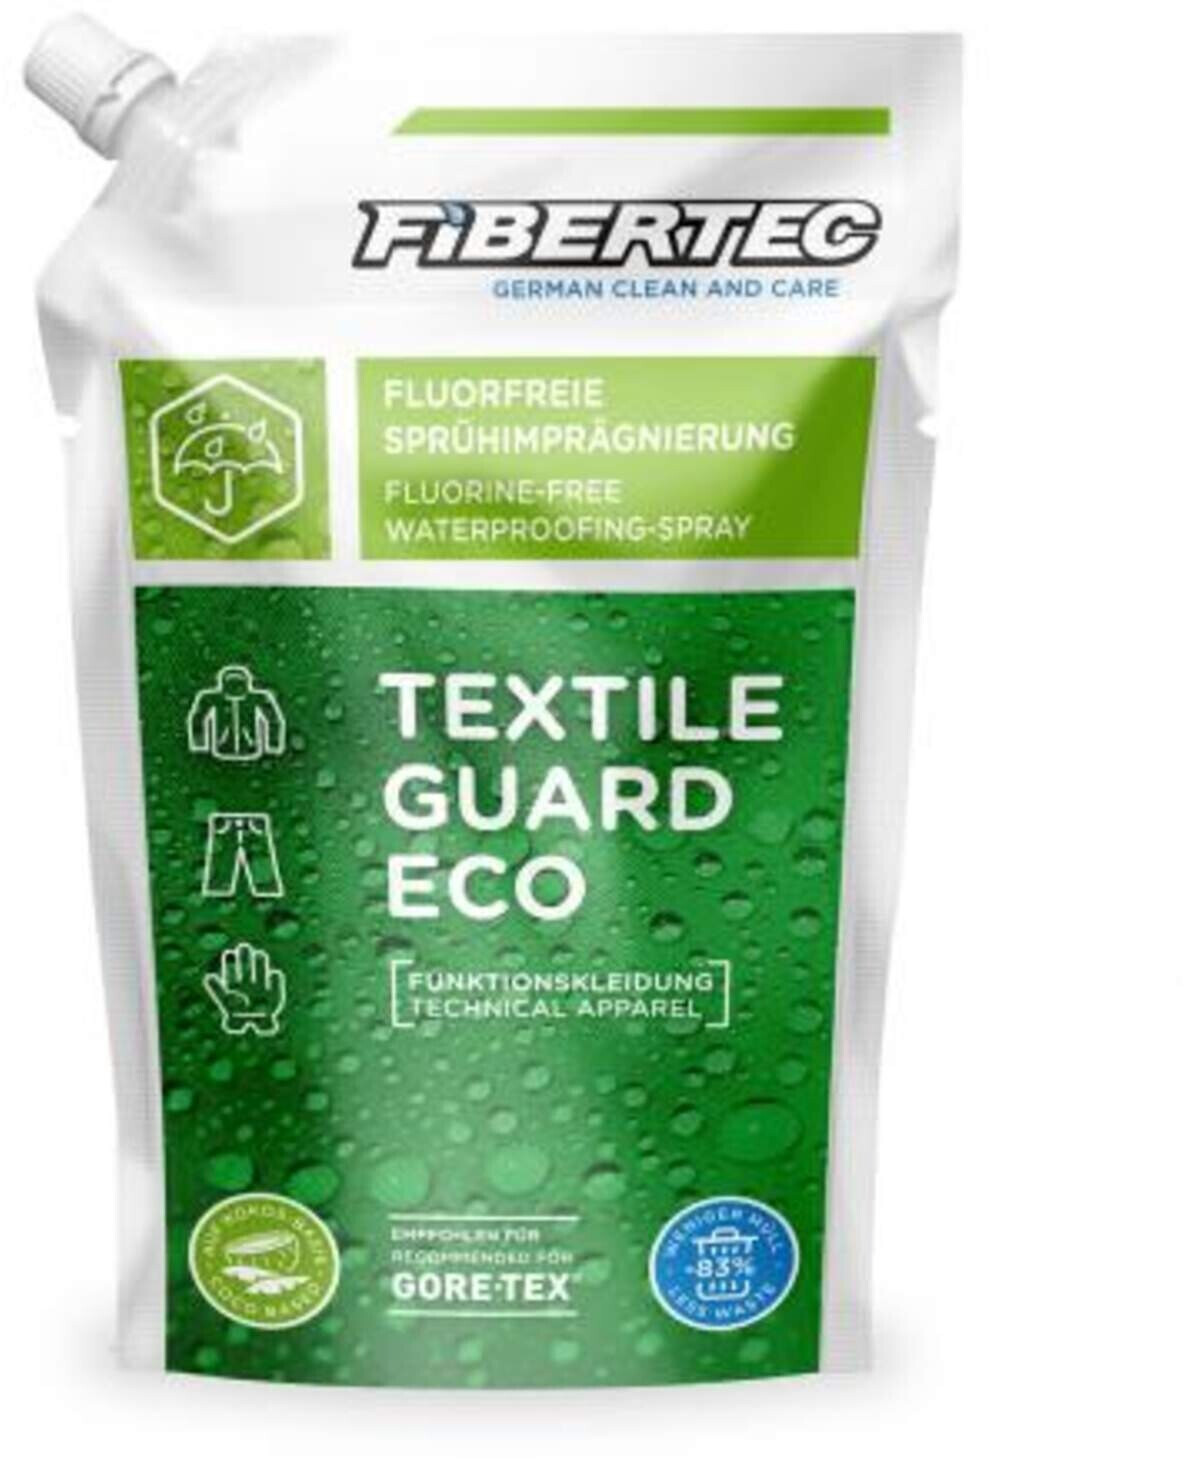 Fibertec Textile Guard Eco Imprägnierspray 500ml Nachfüllpack ab 14,95 €